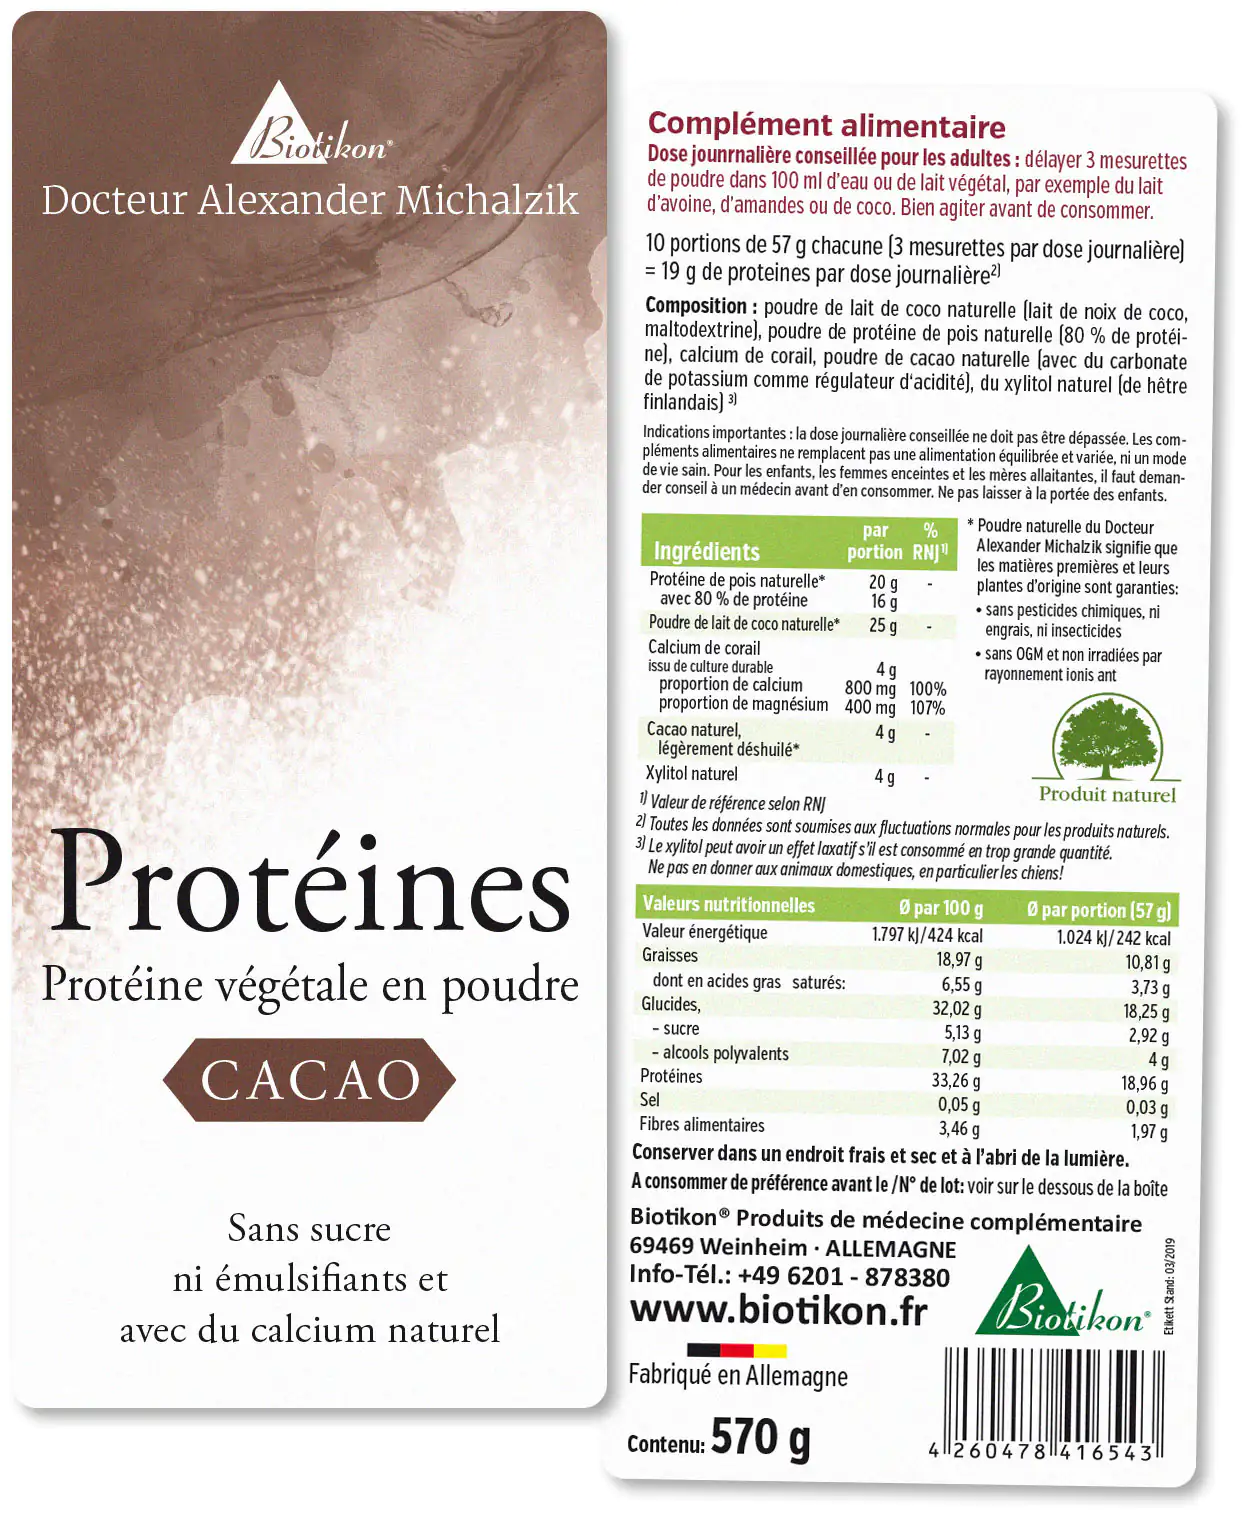 Protéines - en lot de 3, Cacao